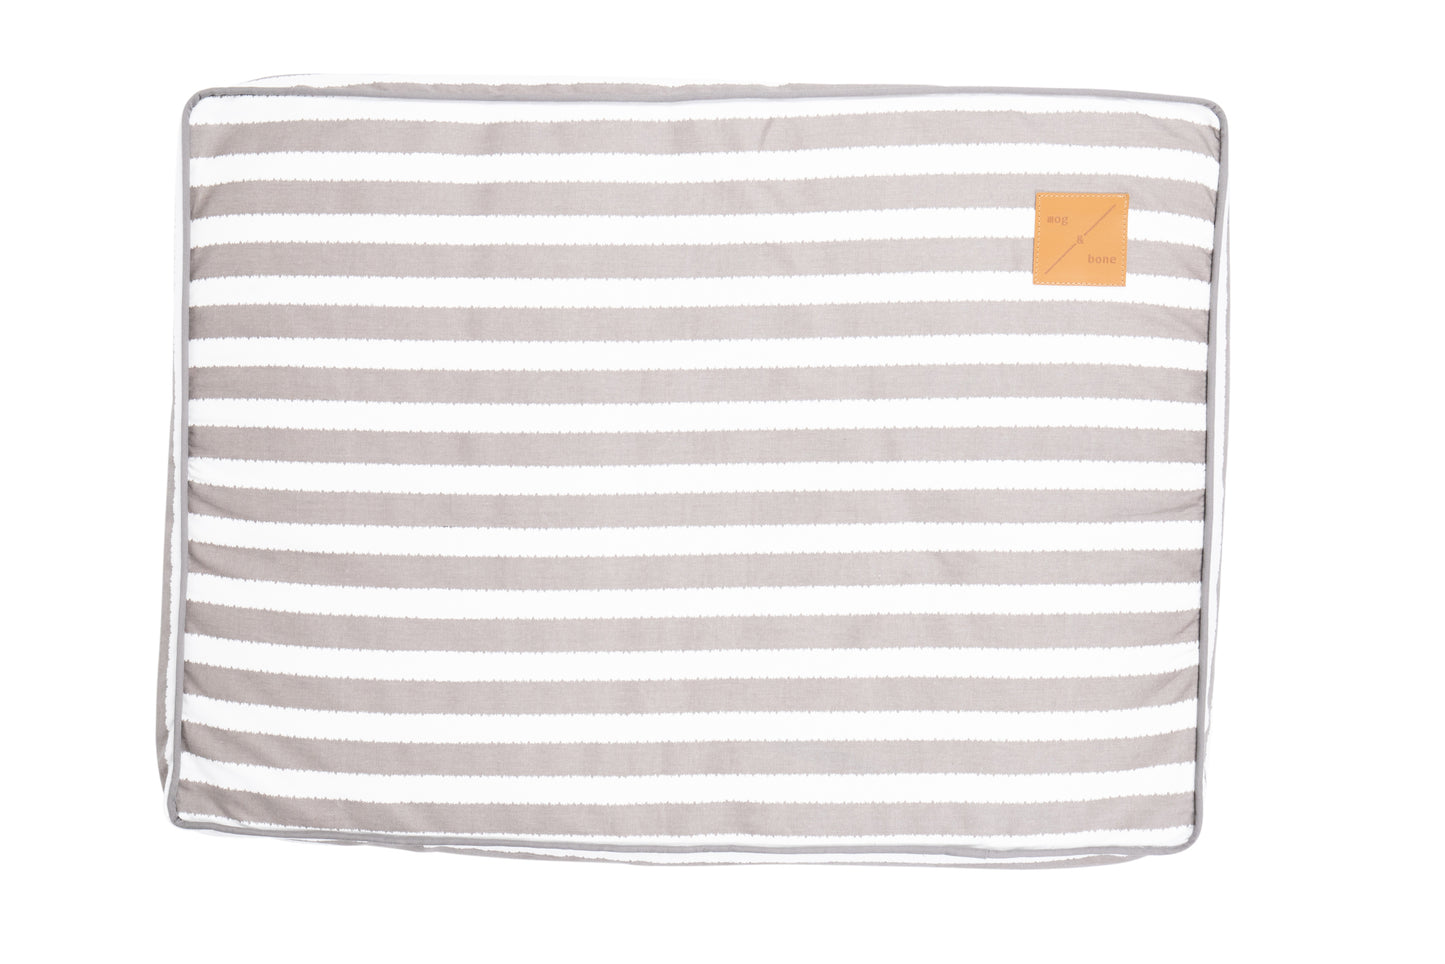 Cushion Bed COVER - Latte Hampton Stripe